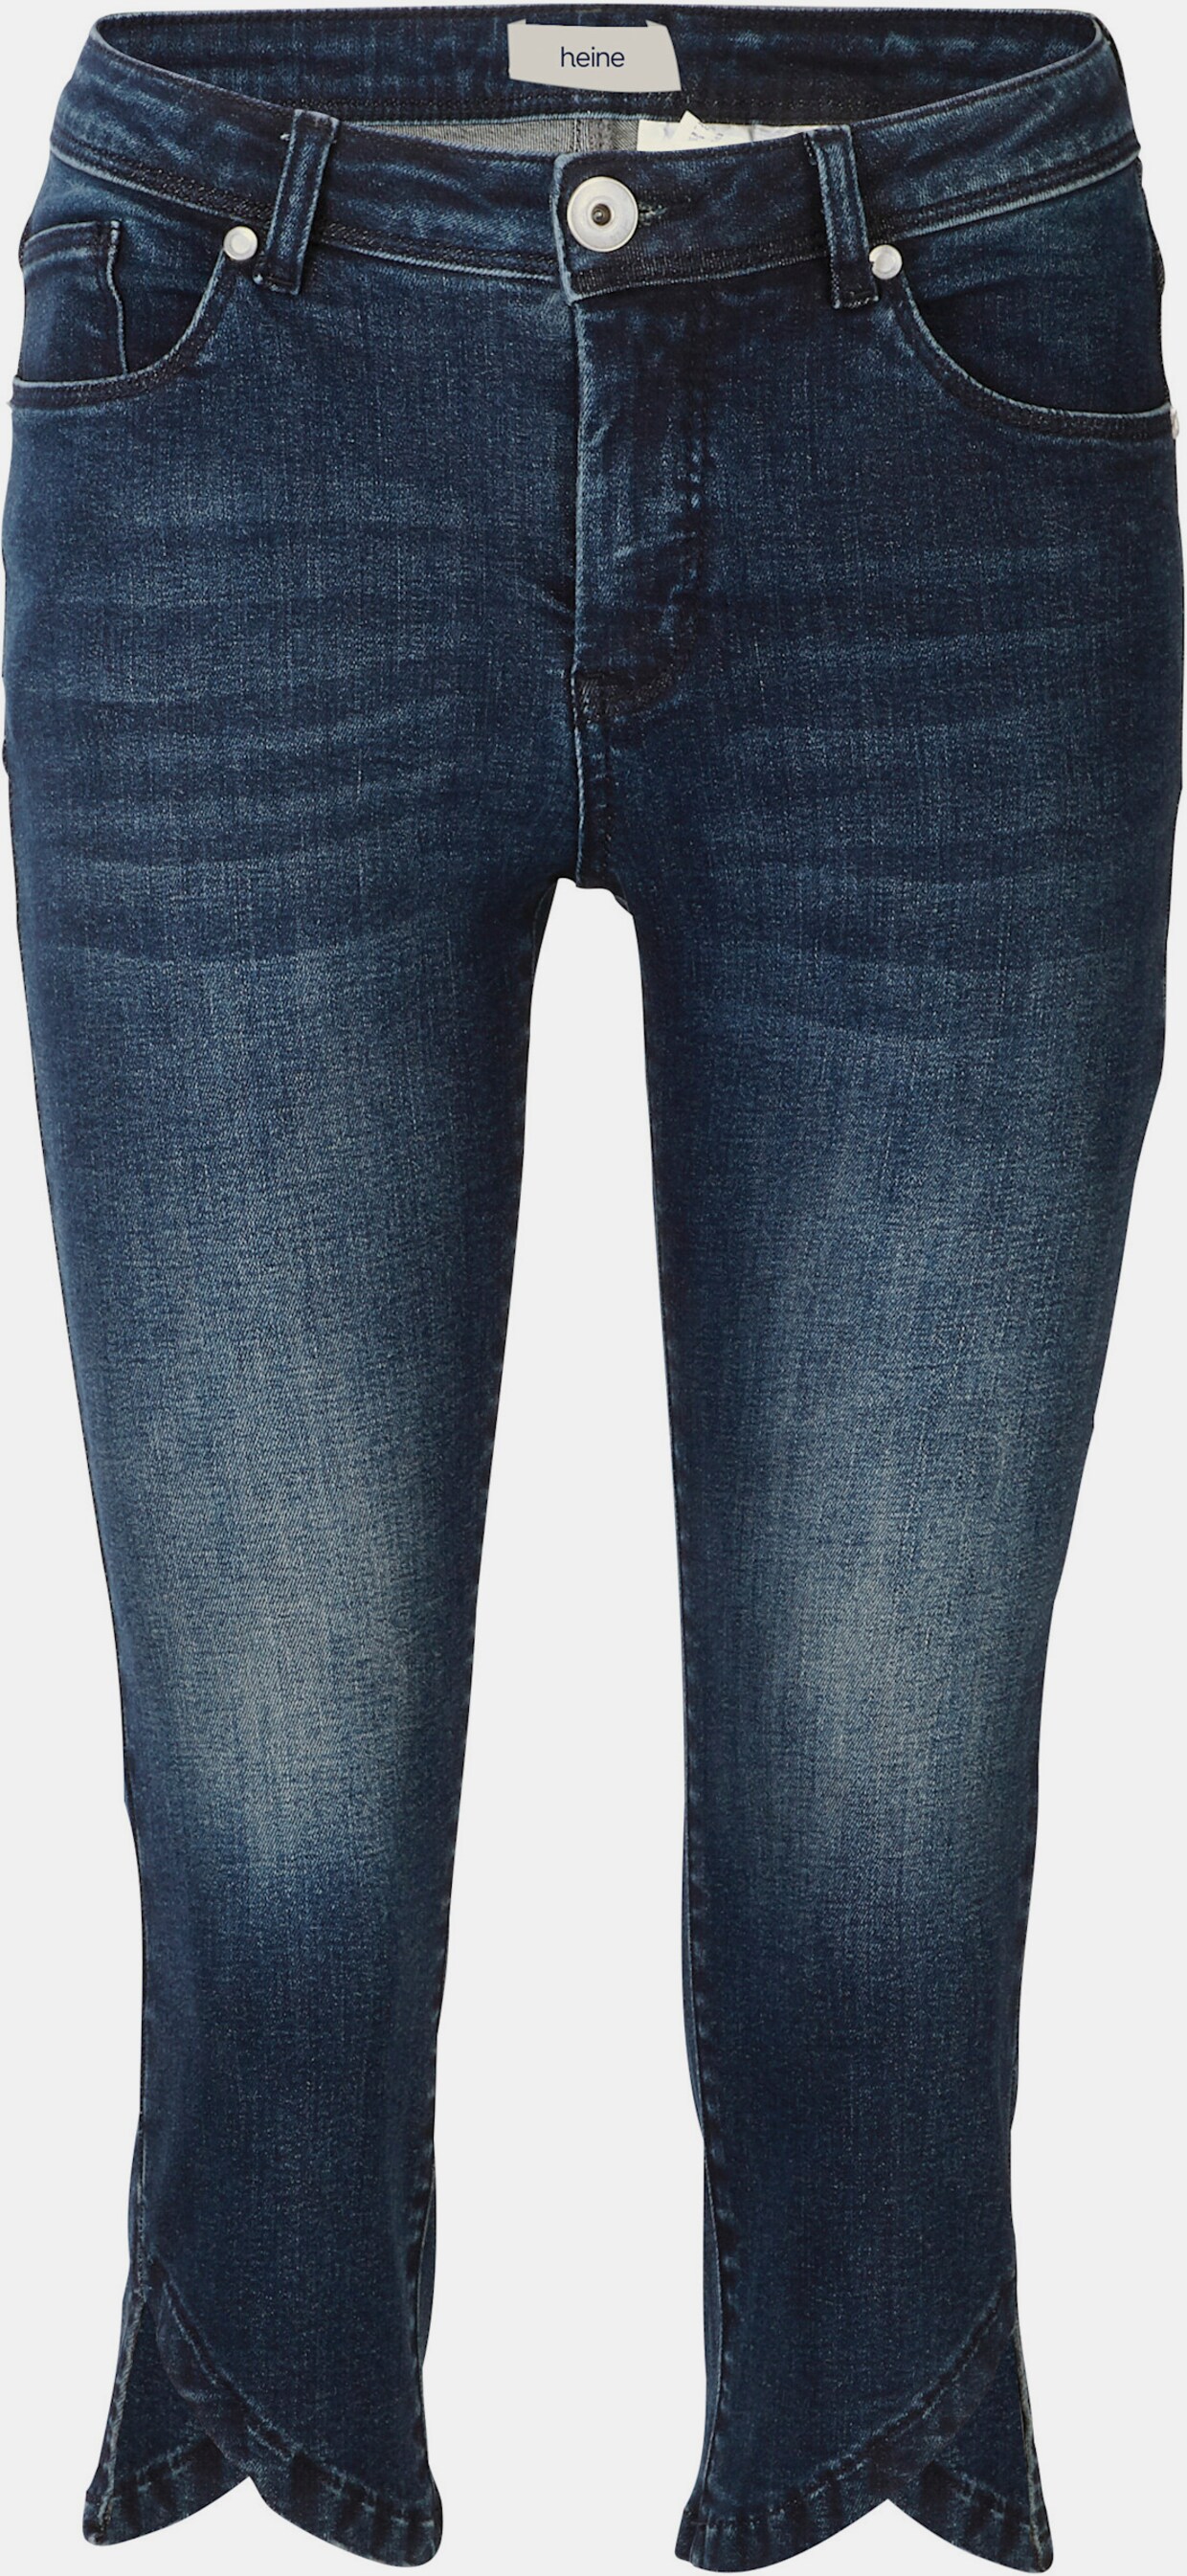 heine Capri-Jeans - dark denim